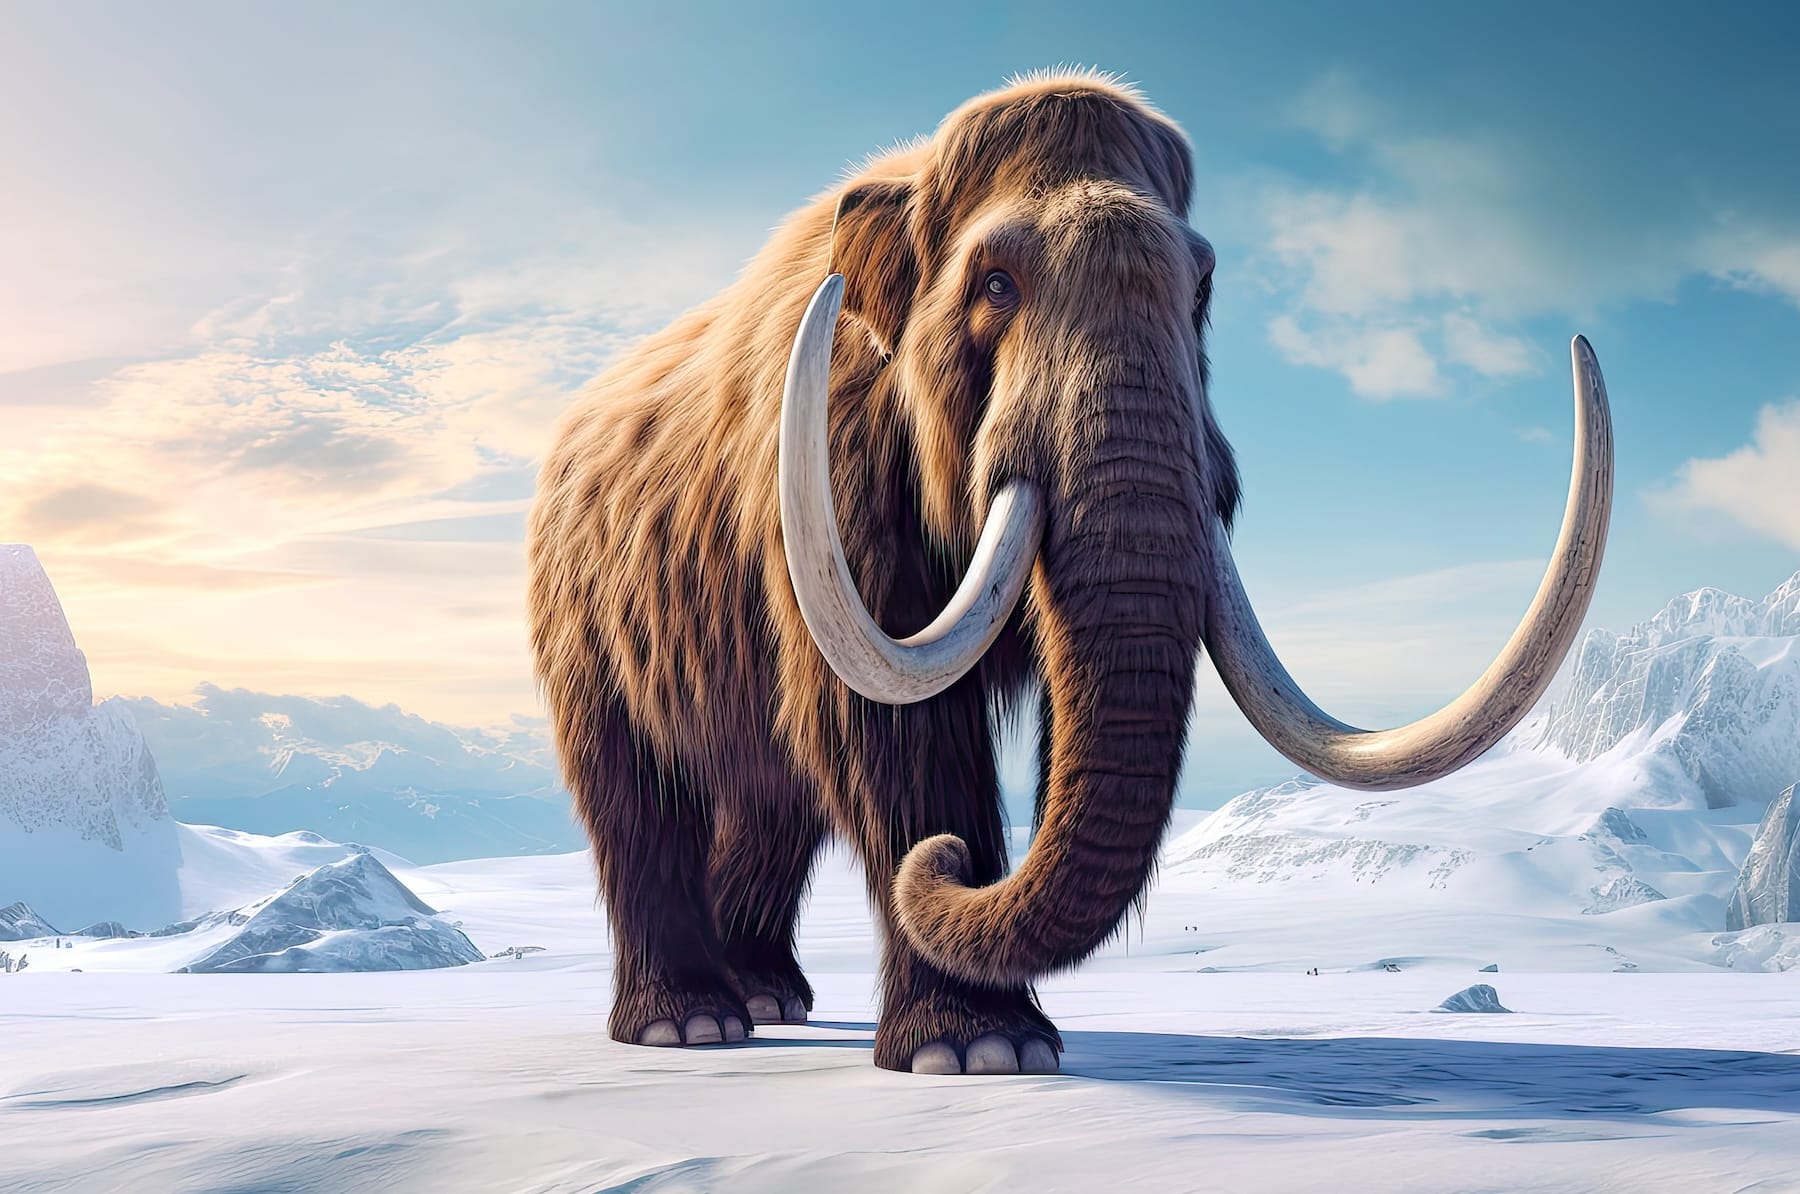 Boneyard Alaska: Woolly Mammoth in Fairbanks?